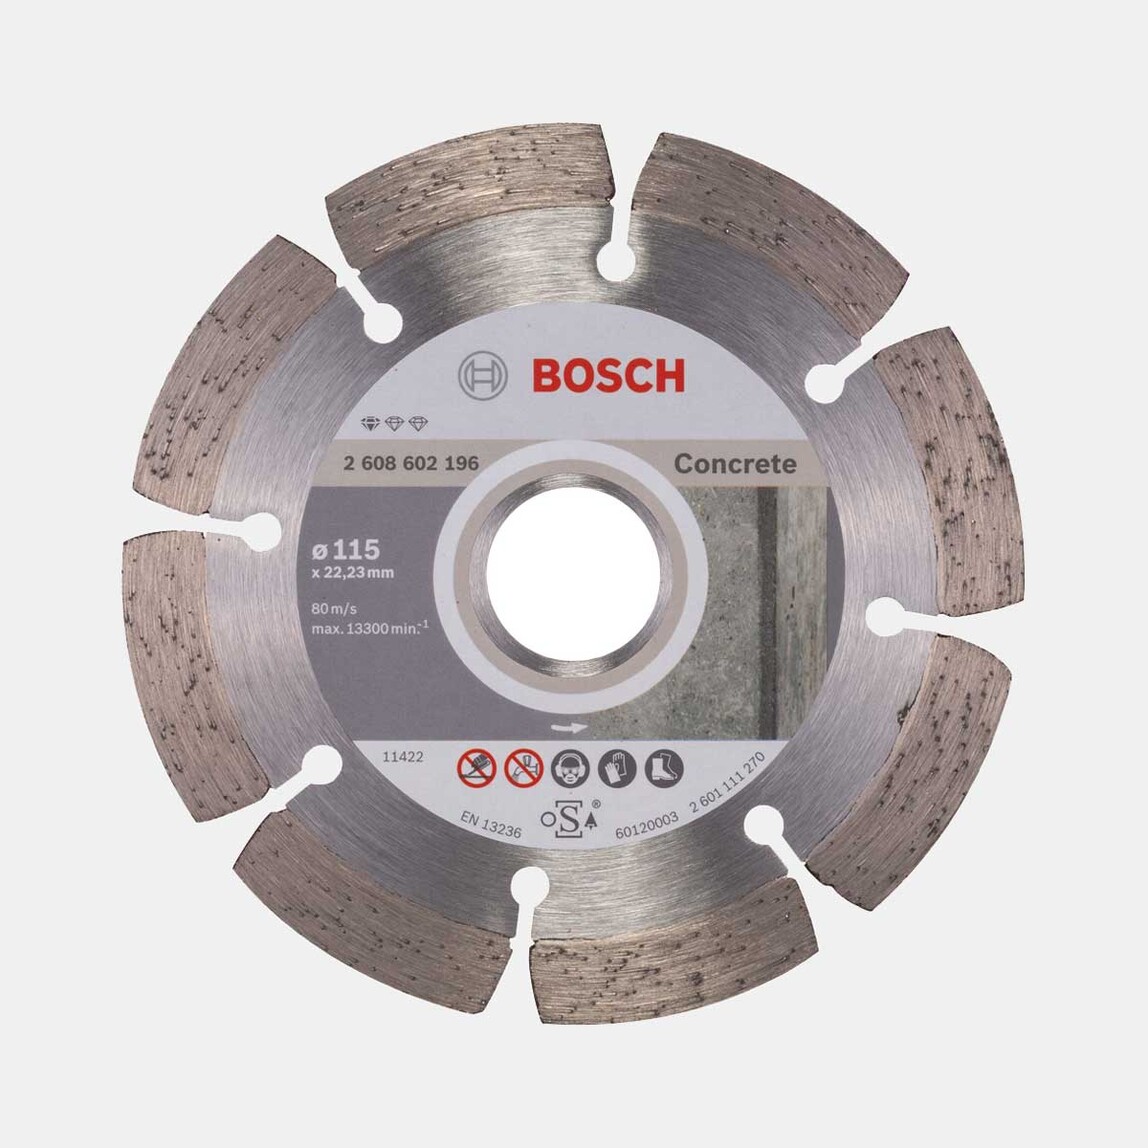    Bosch Elmas Disk  115 mm Standart For Concrete  